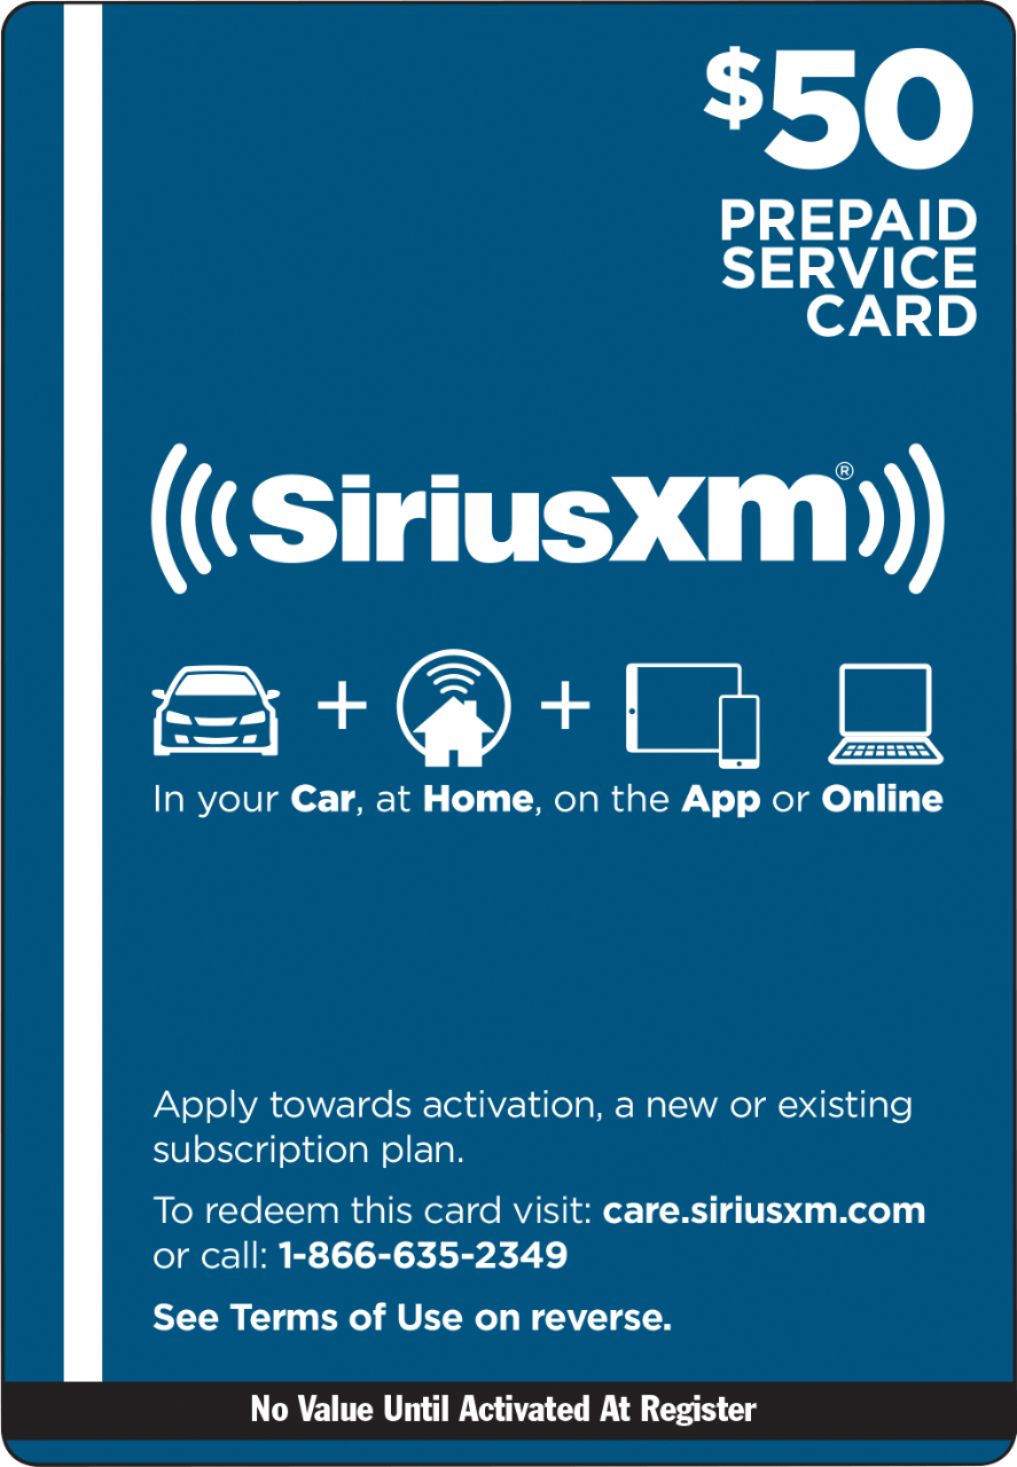 $50 Prepaid Service Card for SiriusXM Satellite Radio - Multi